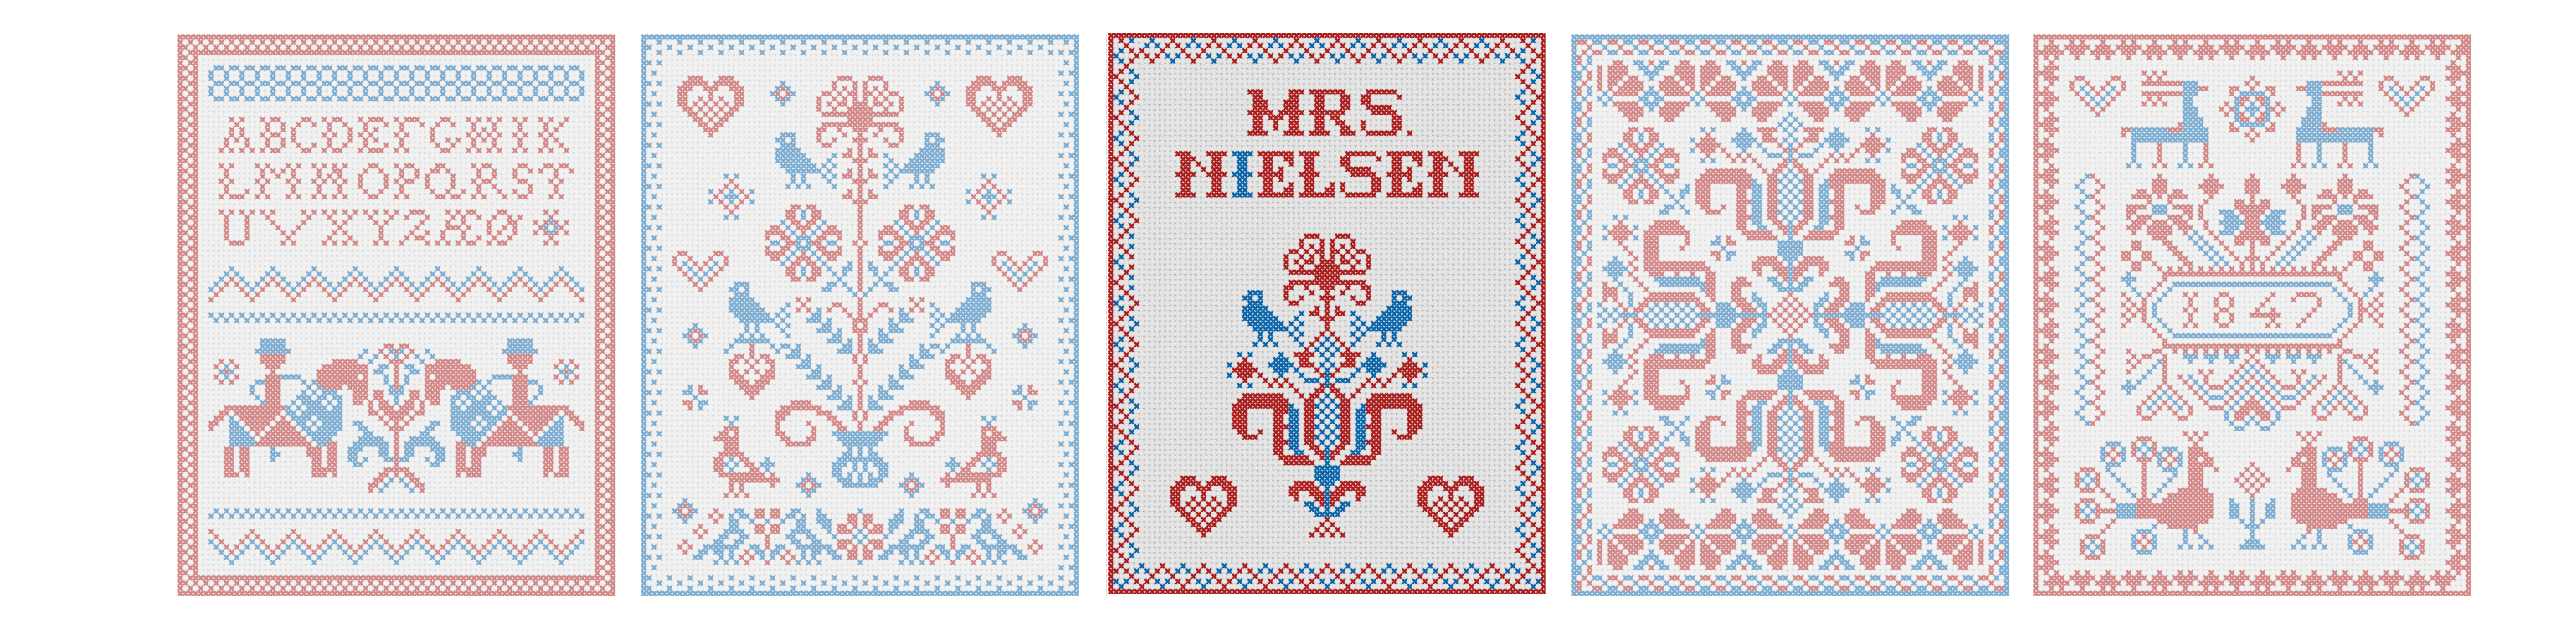 Norwegian Embroidery Patterns Mrs Nielsen Embroidery Scandinavian Cross Stitch Embroidery Patterns